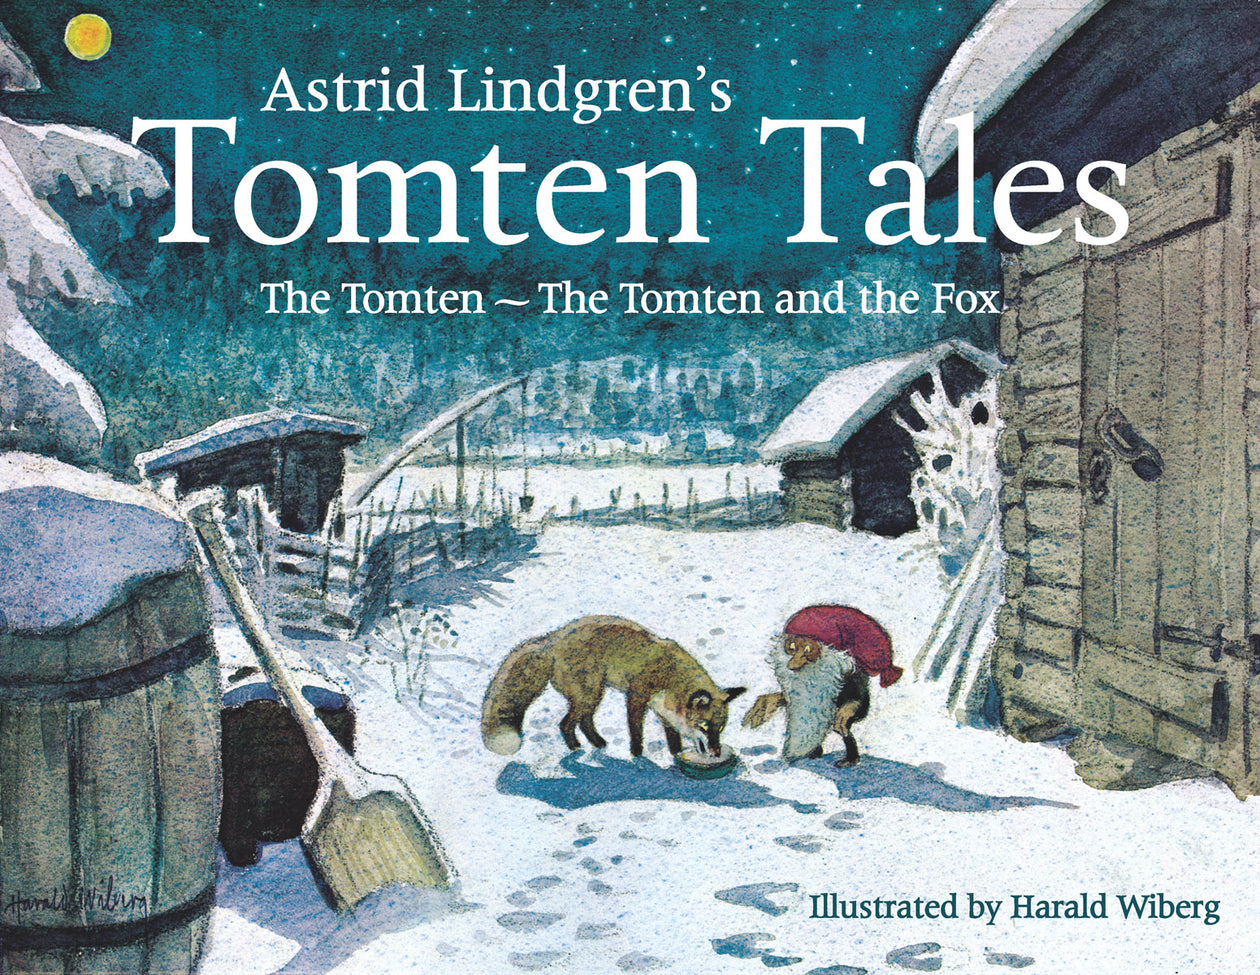 Astrid Lindgren's Tomten Tales, illustrated by Harald Wiberg